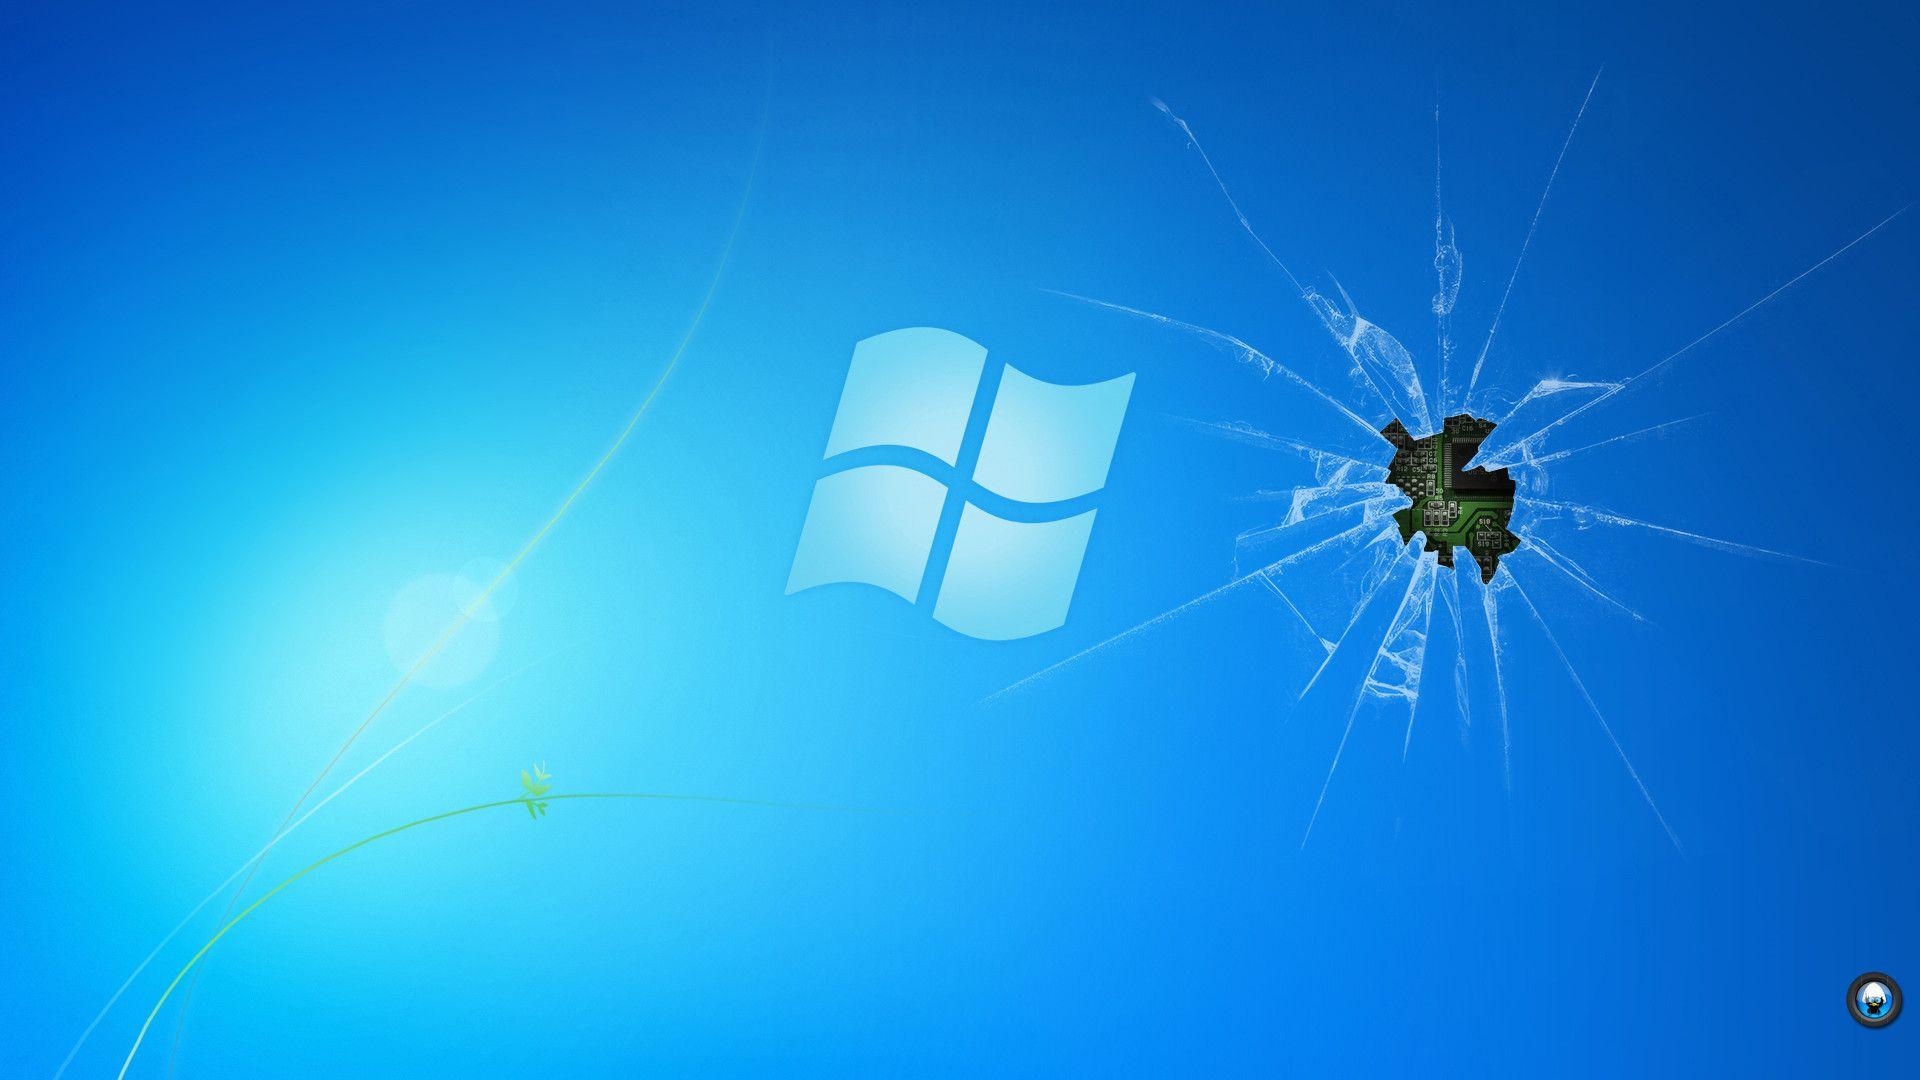 windows xp background broken